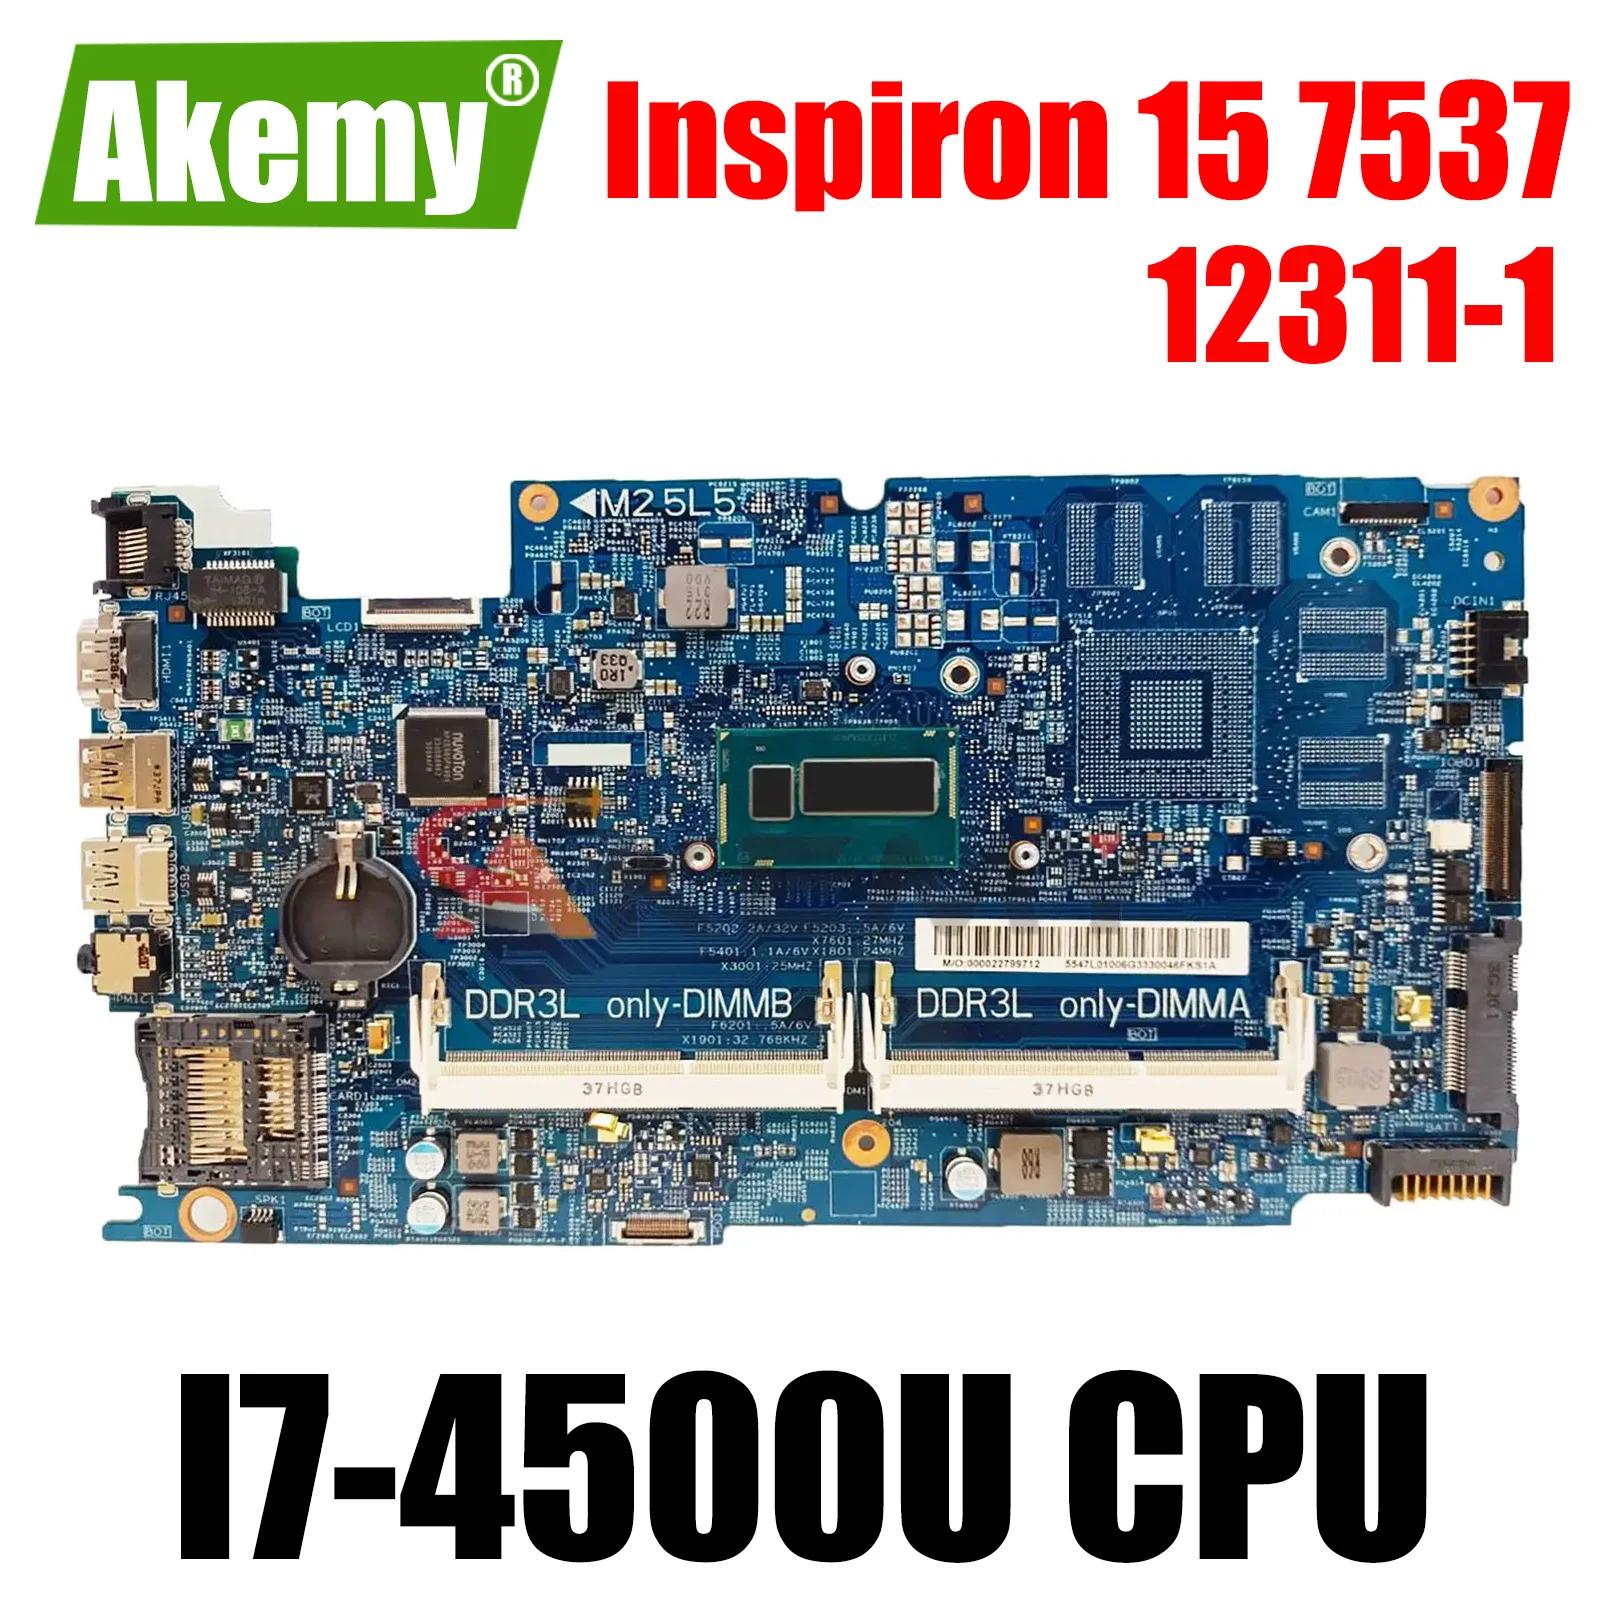 DELL Inspiron 15 7537 Ʈ   I7-4500U CPU DDR3L DOH50 MB 12311-1   KWC14 CN-043KWC 043KWC